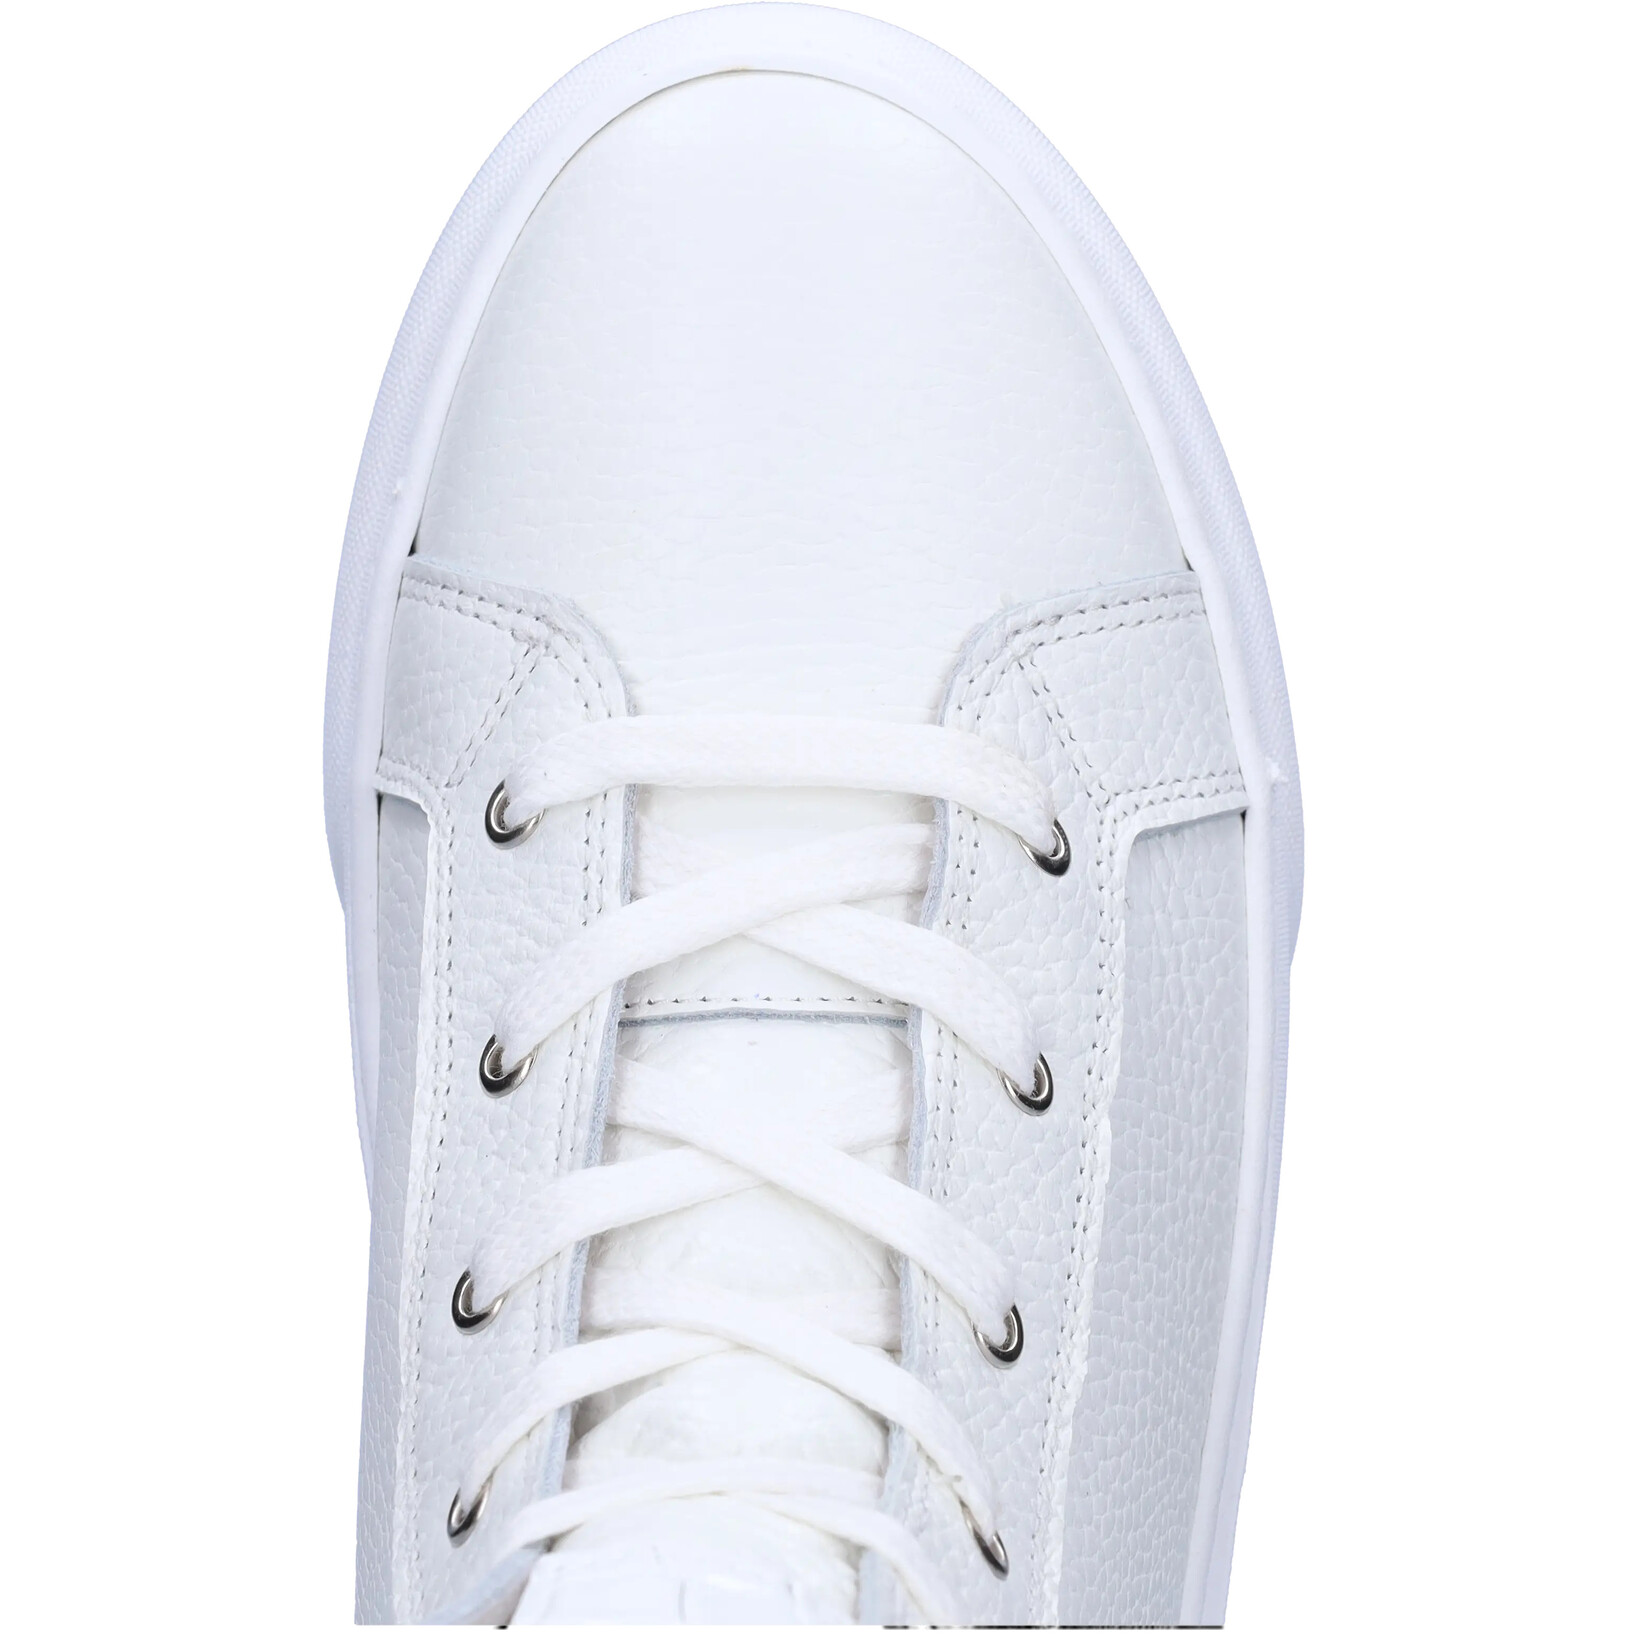 JJ Footwear La Paz - White